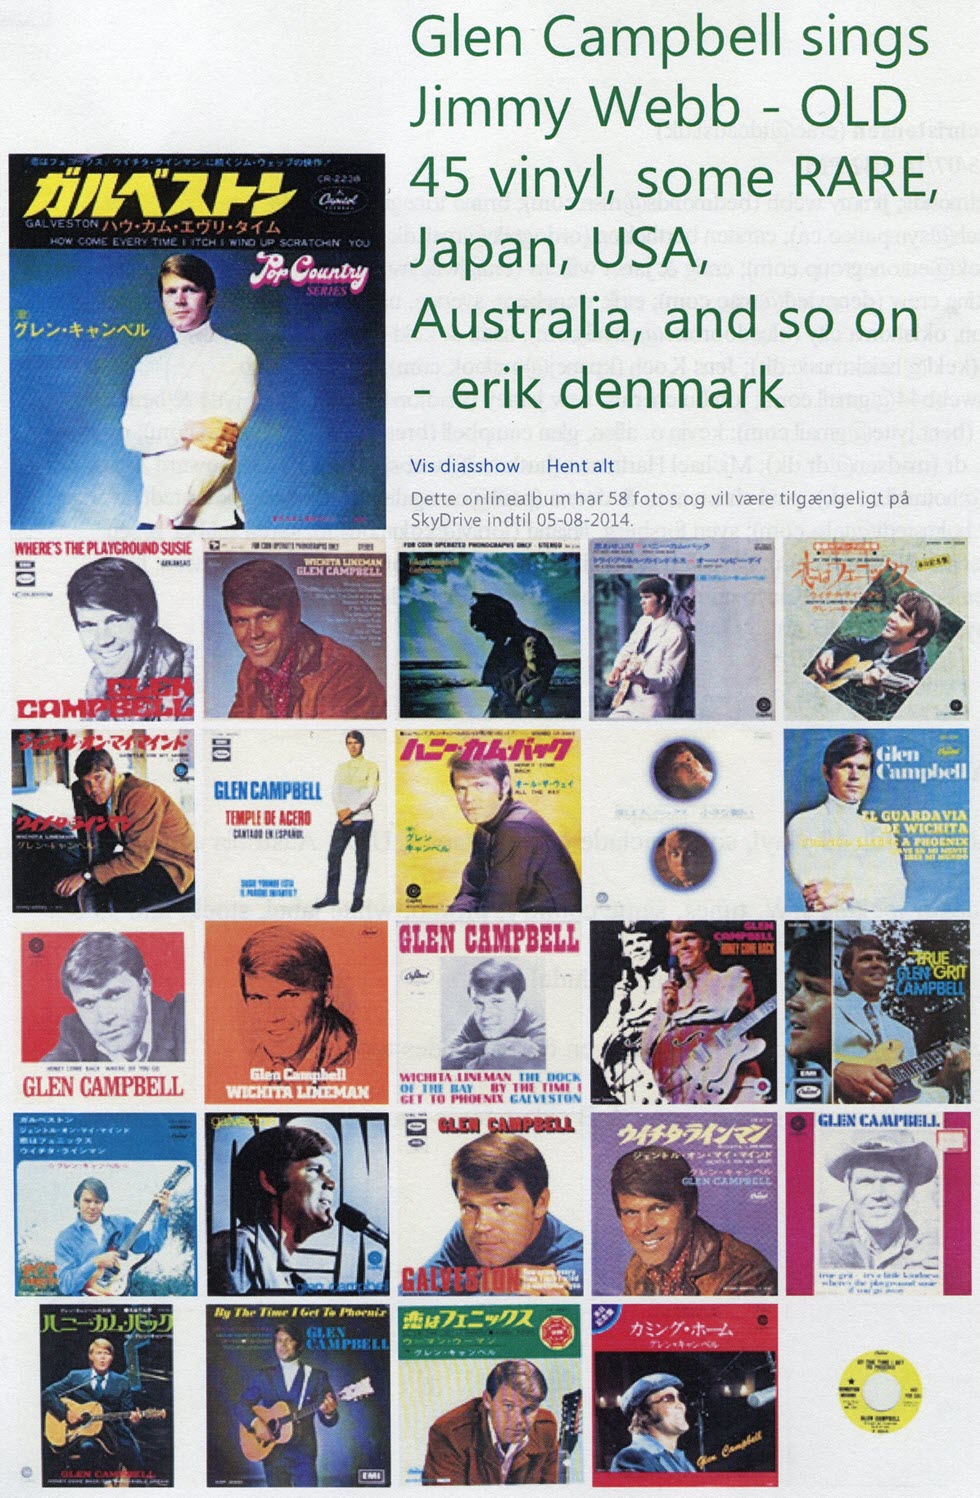 Erik the Dane's 45 Vinyl Collection_Glen Campbell Sings Jimmy Webb Songs_gcf.jpg